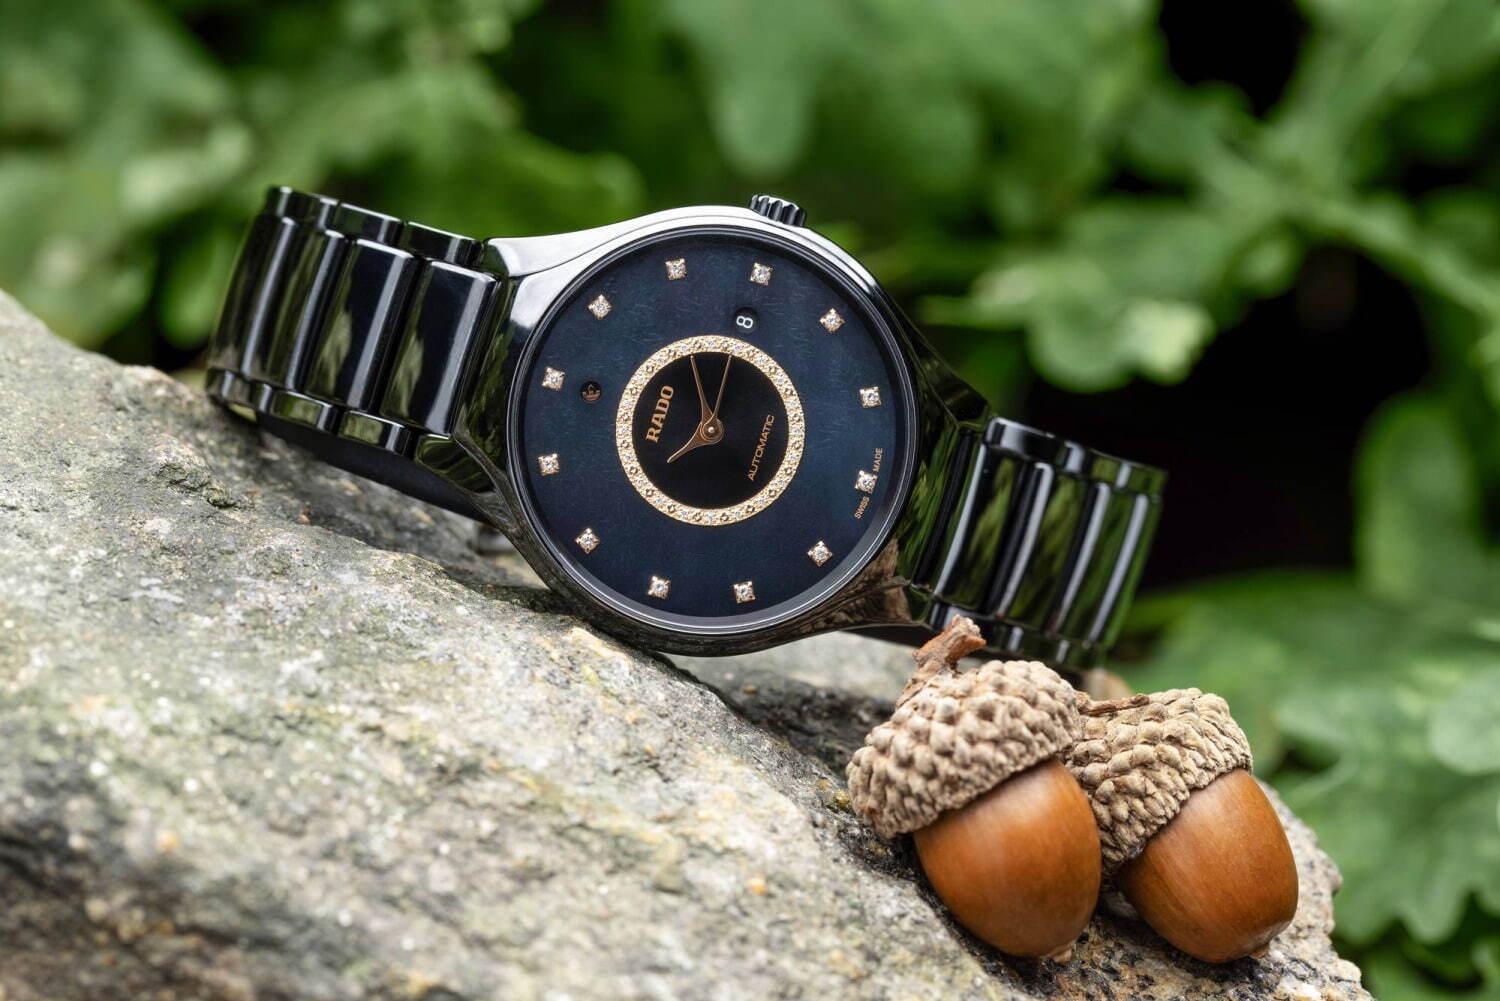 RADO sapphire crystal レディース腕時計 黒×ゴールドカラー 